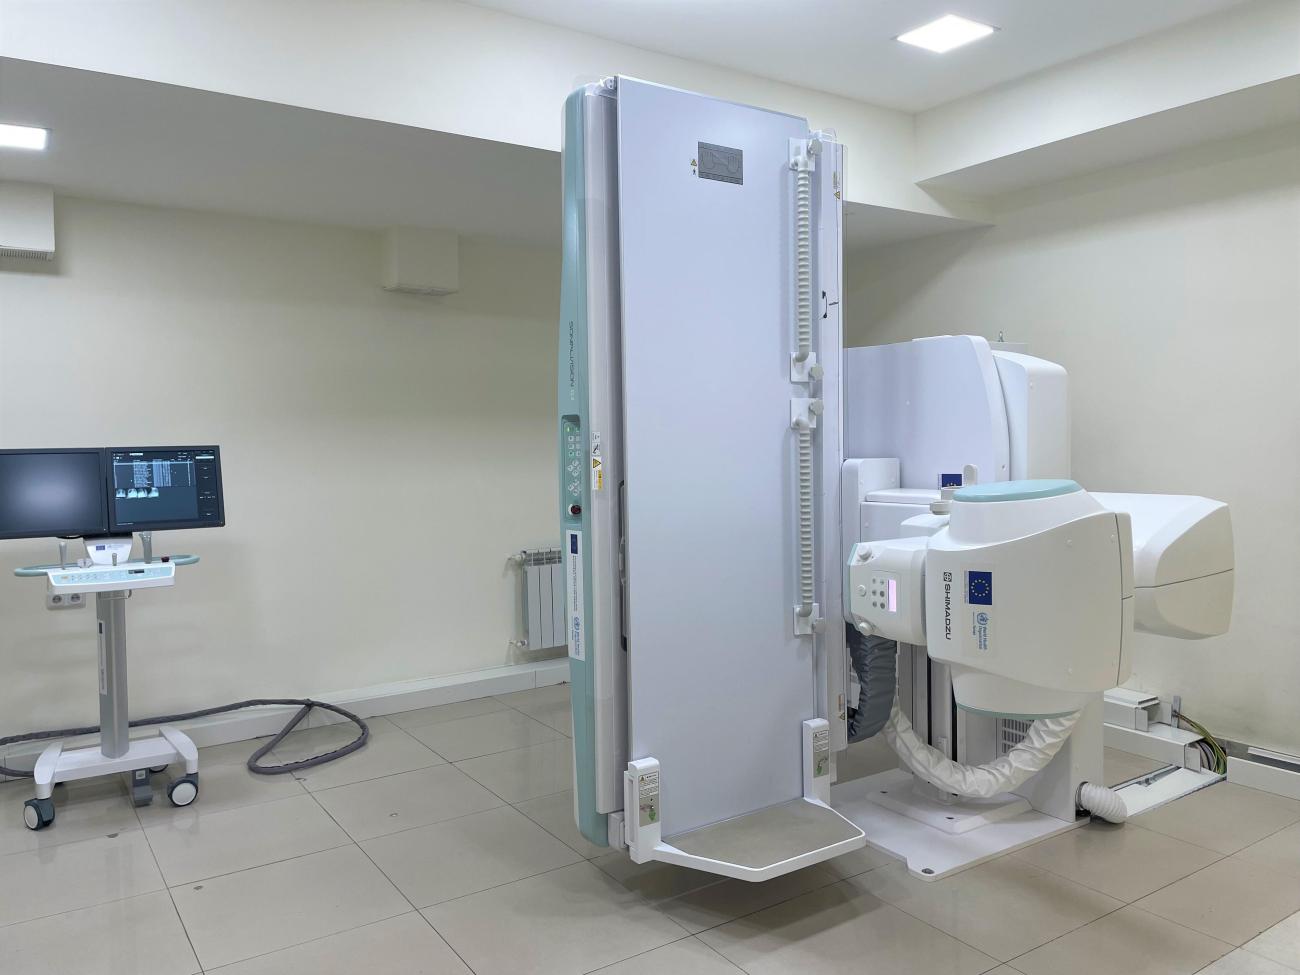 The digital X-ray equipment at Goris Medical Center.